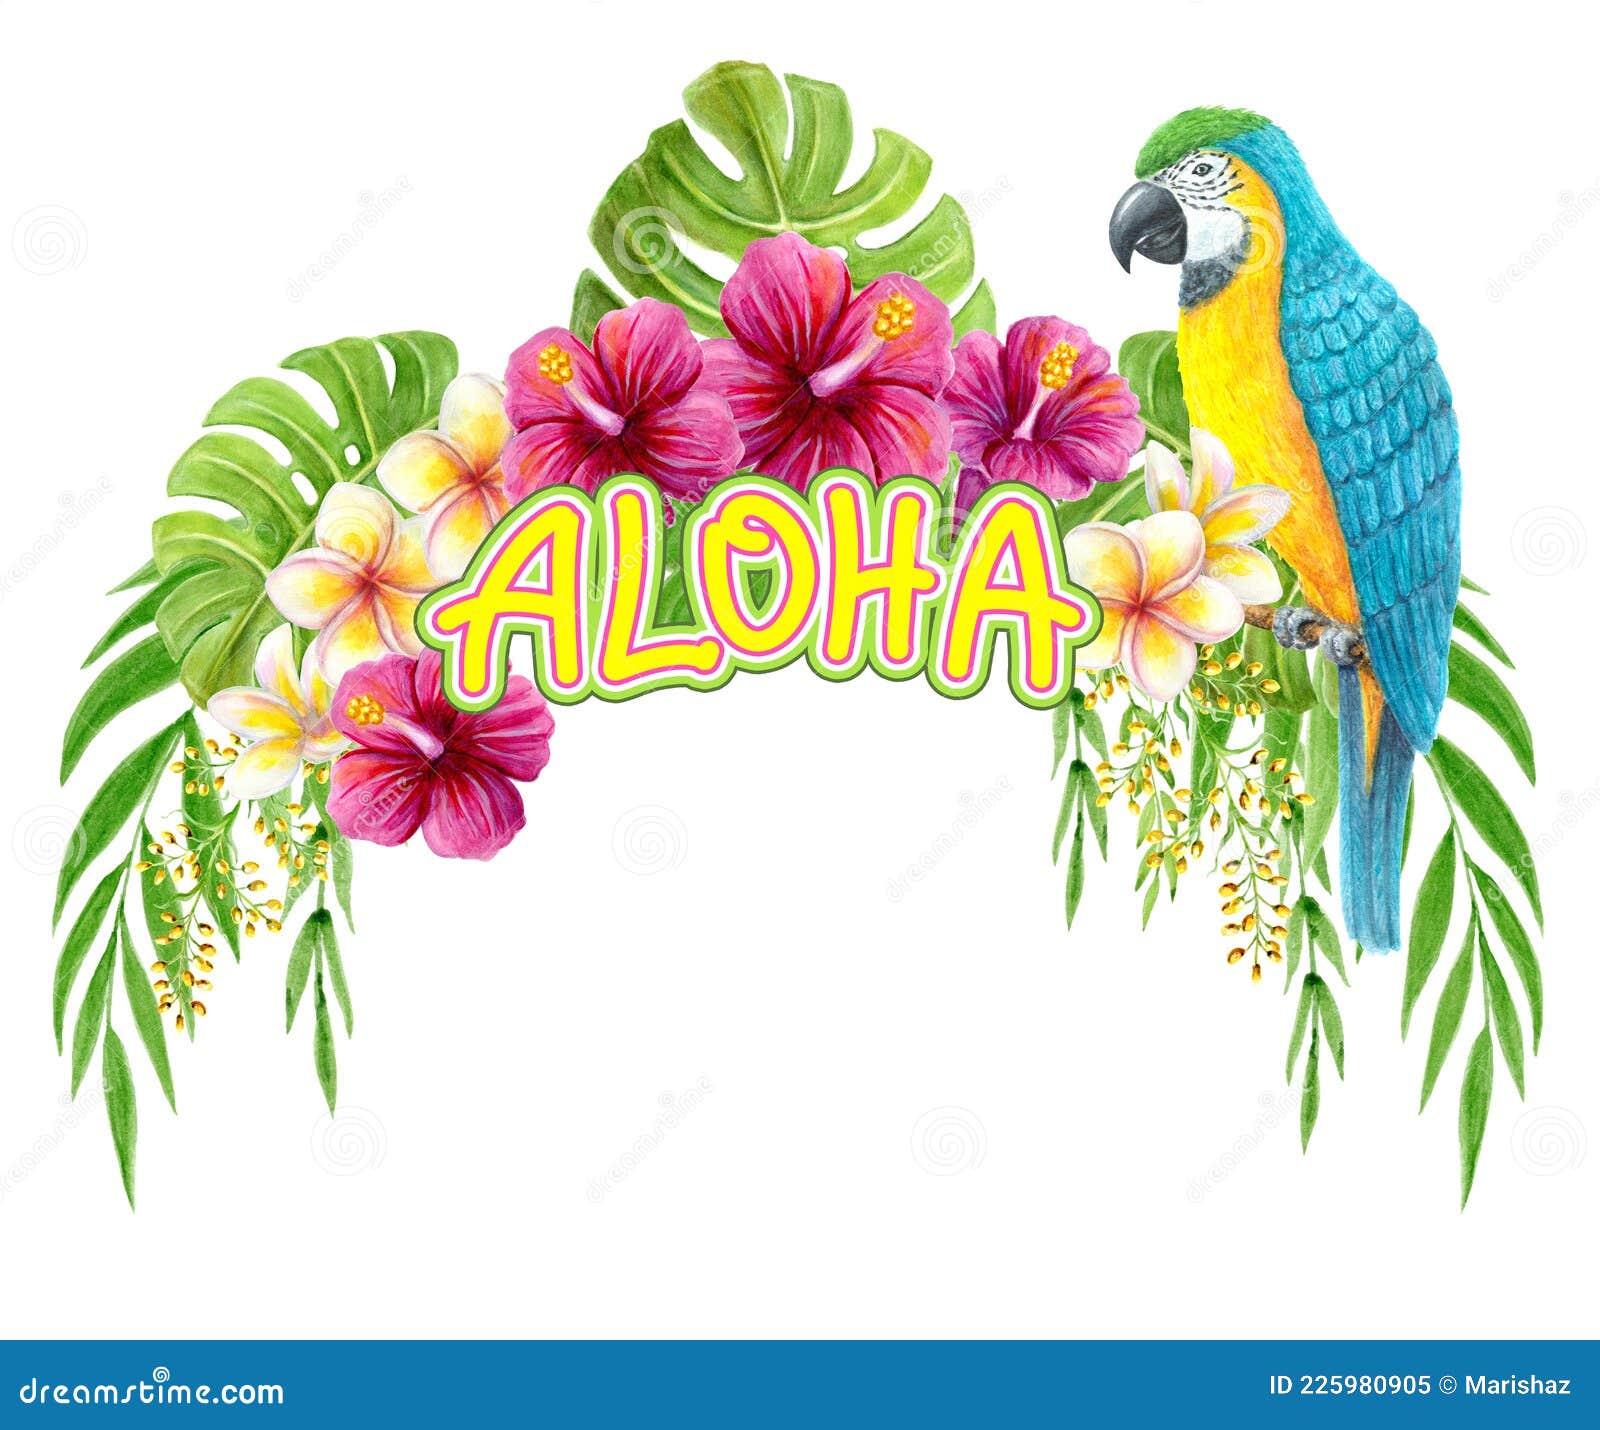 hawaiian clip art background